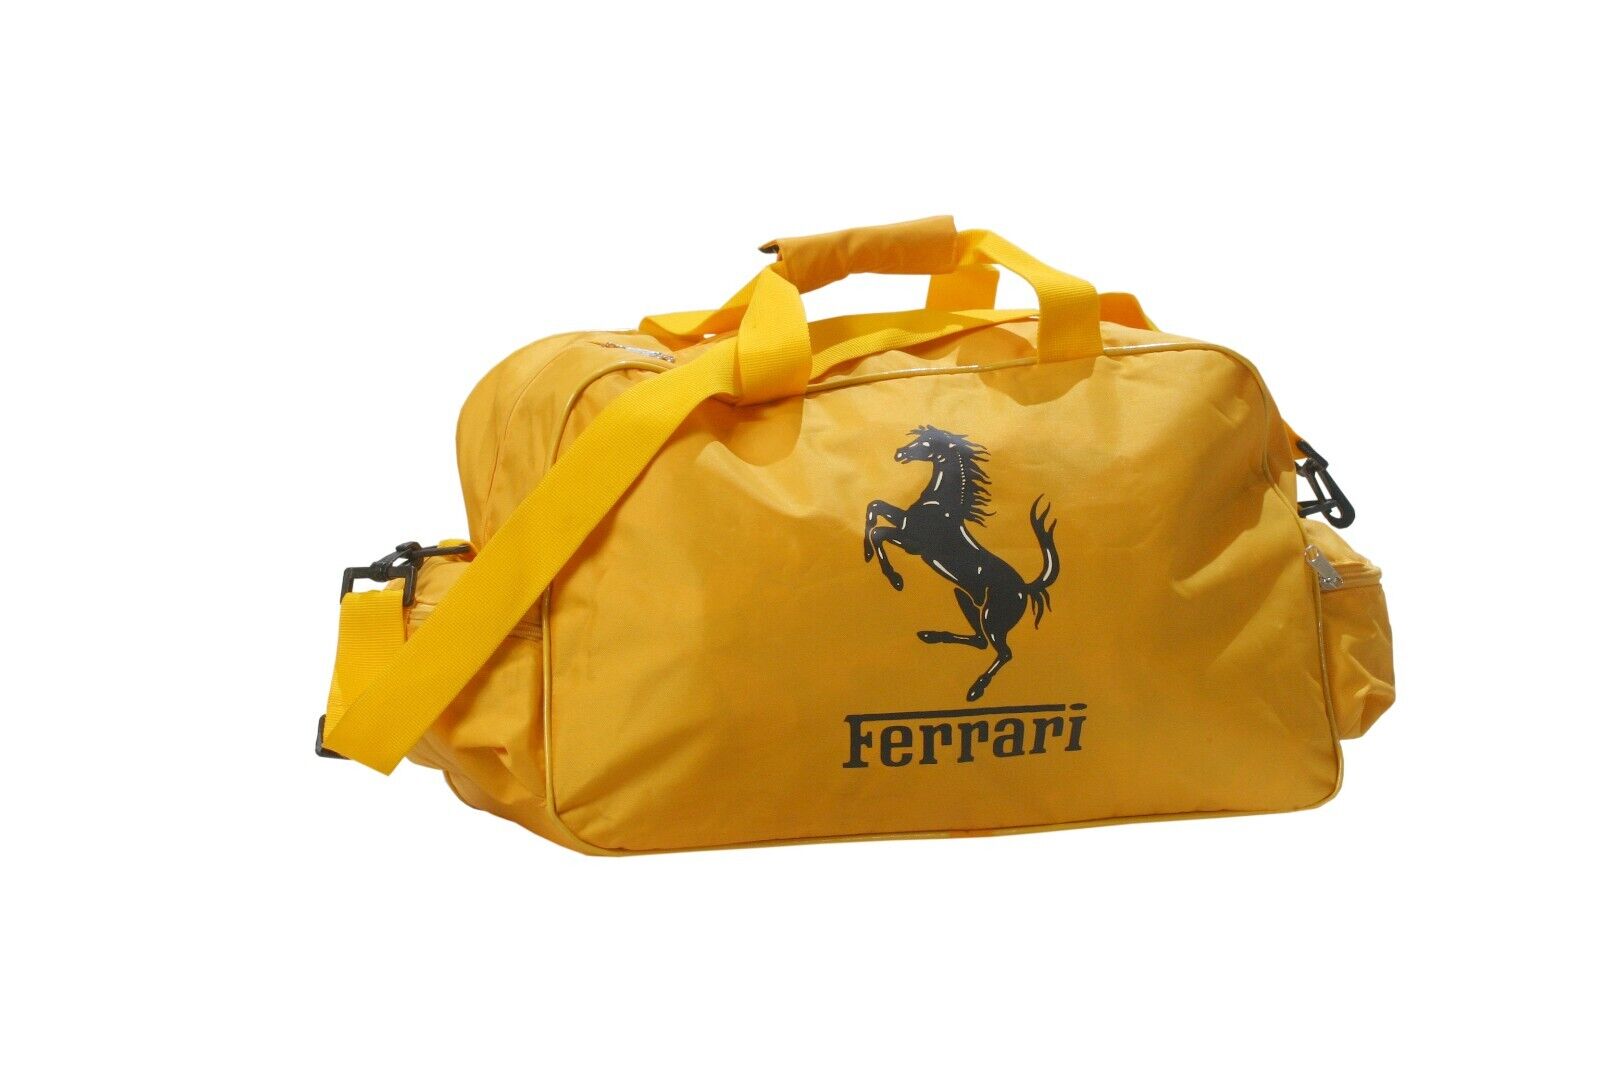 Ferrari Yellow Bag / Travel / Gym / Sports / Shoulder / Messanger